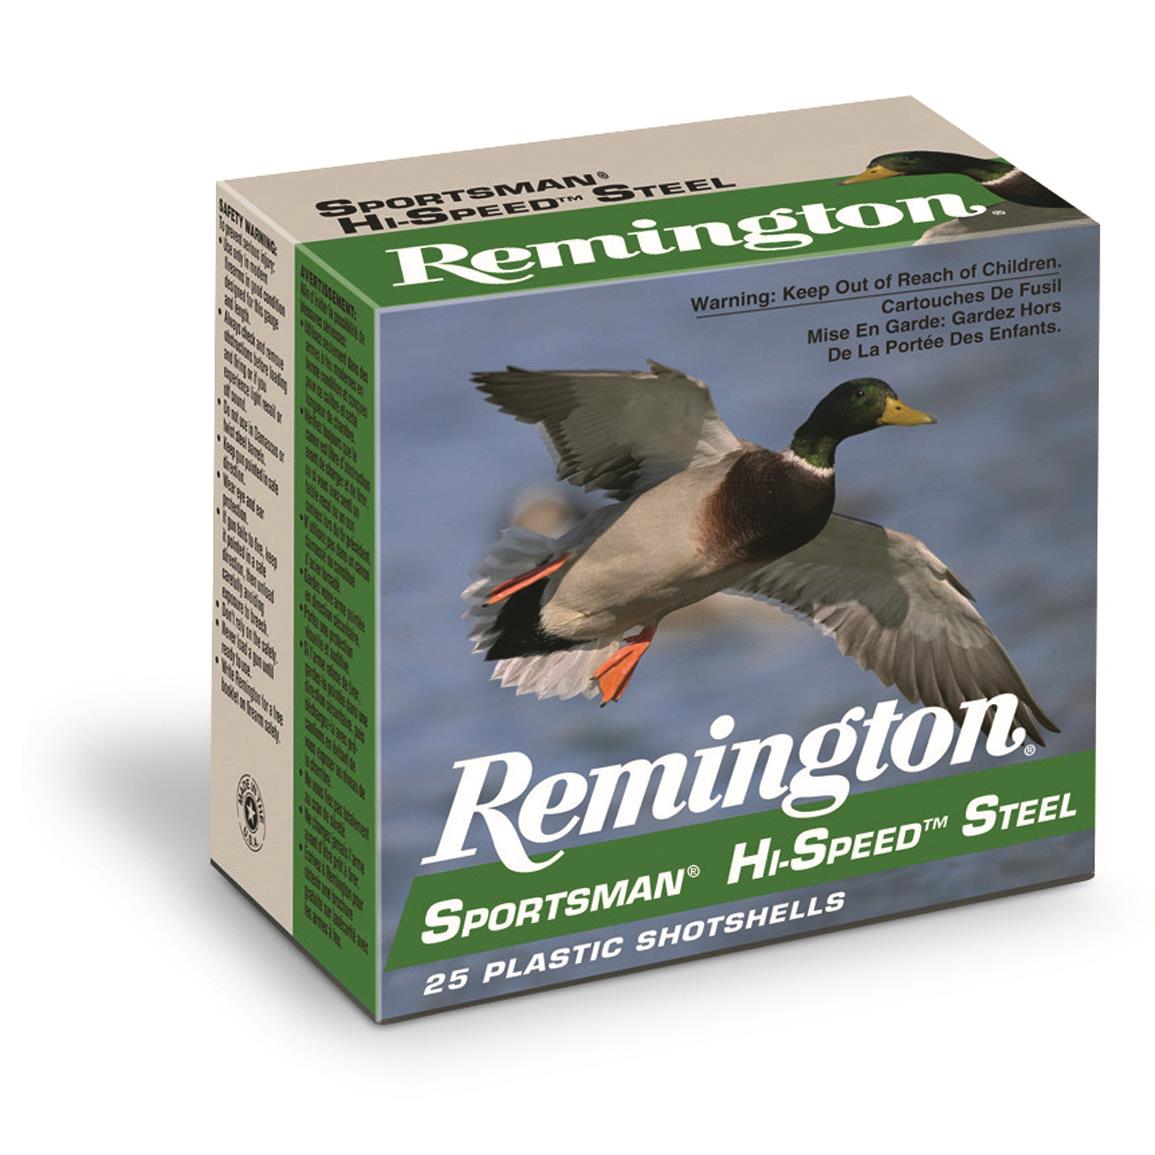 Remington Sportsman Hi-Speed Steel, 20 Gauge, 3" Shot Shells, 1 oz., 250 Rounds